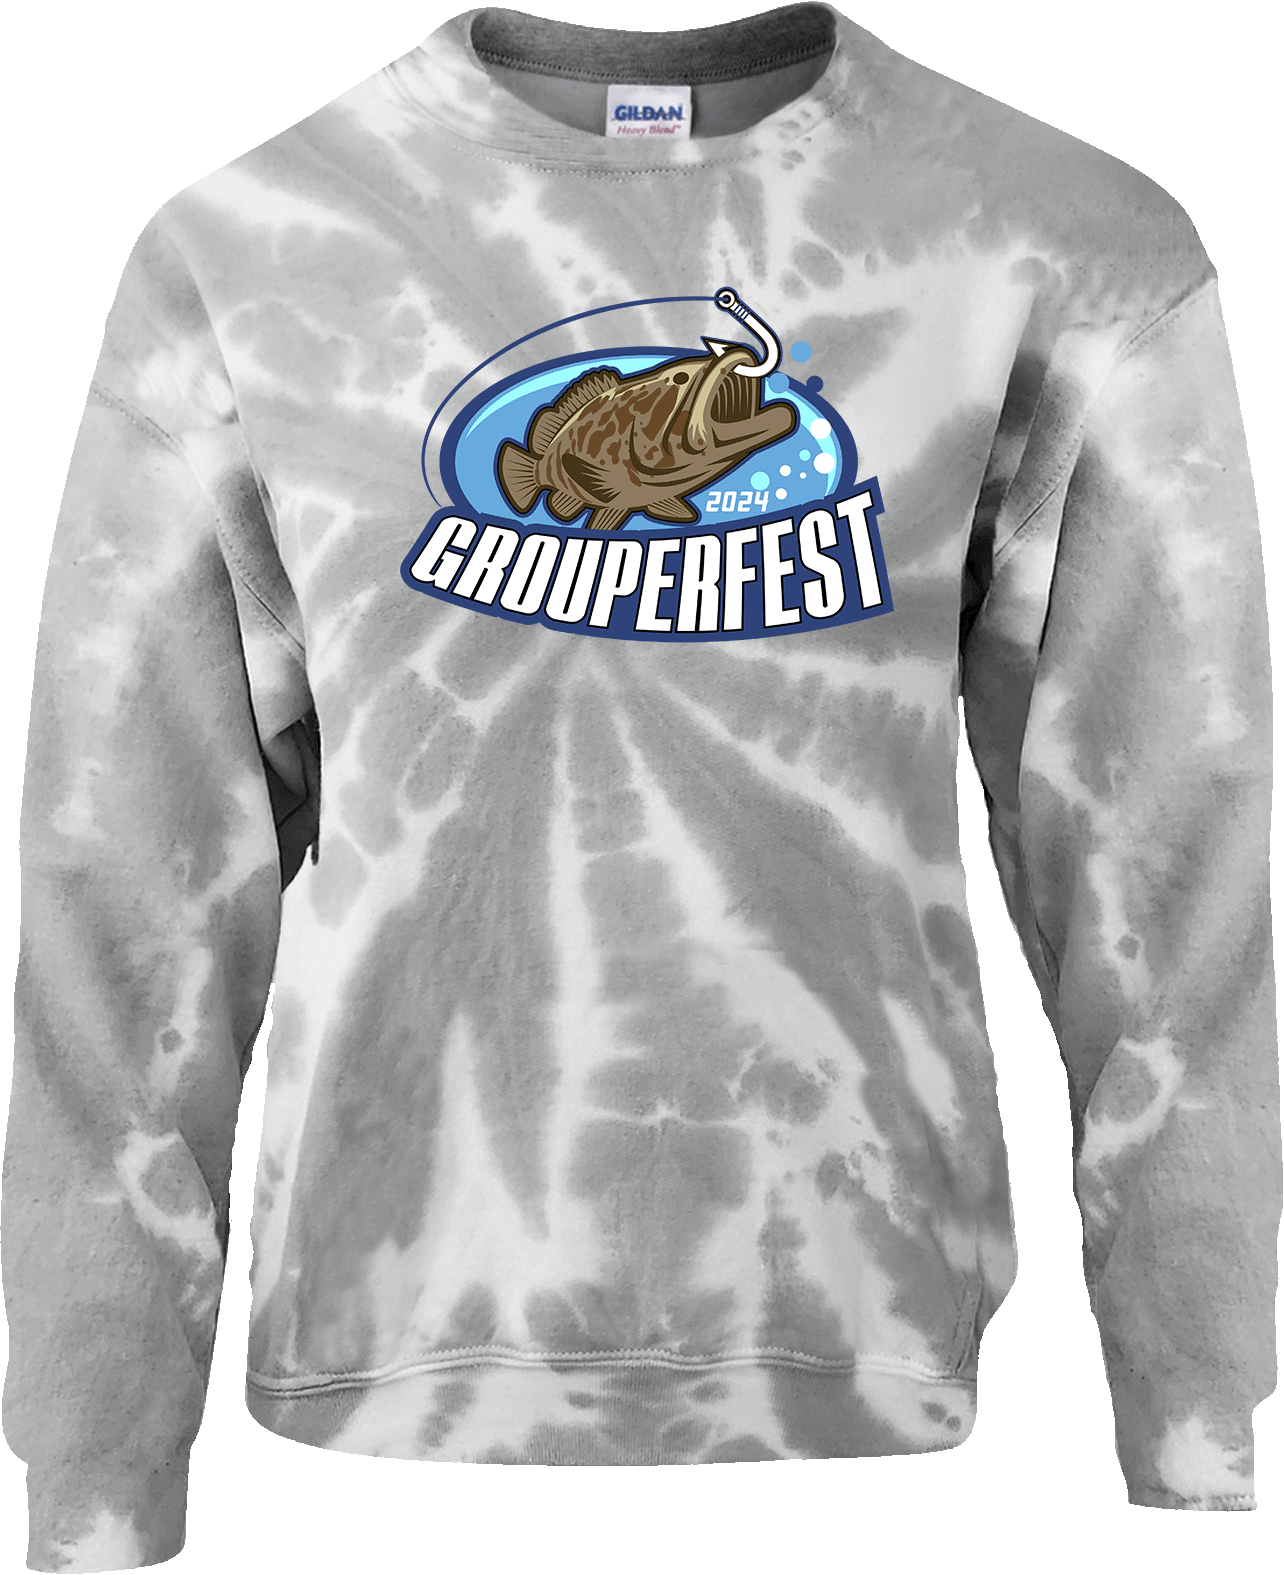 Crew Sweatershirt - 2024 Grouperfest